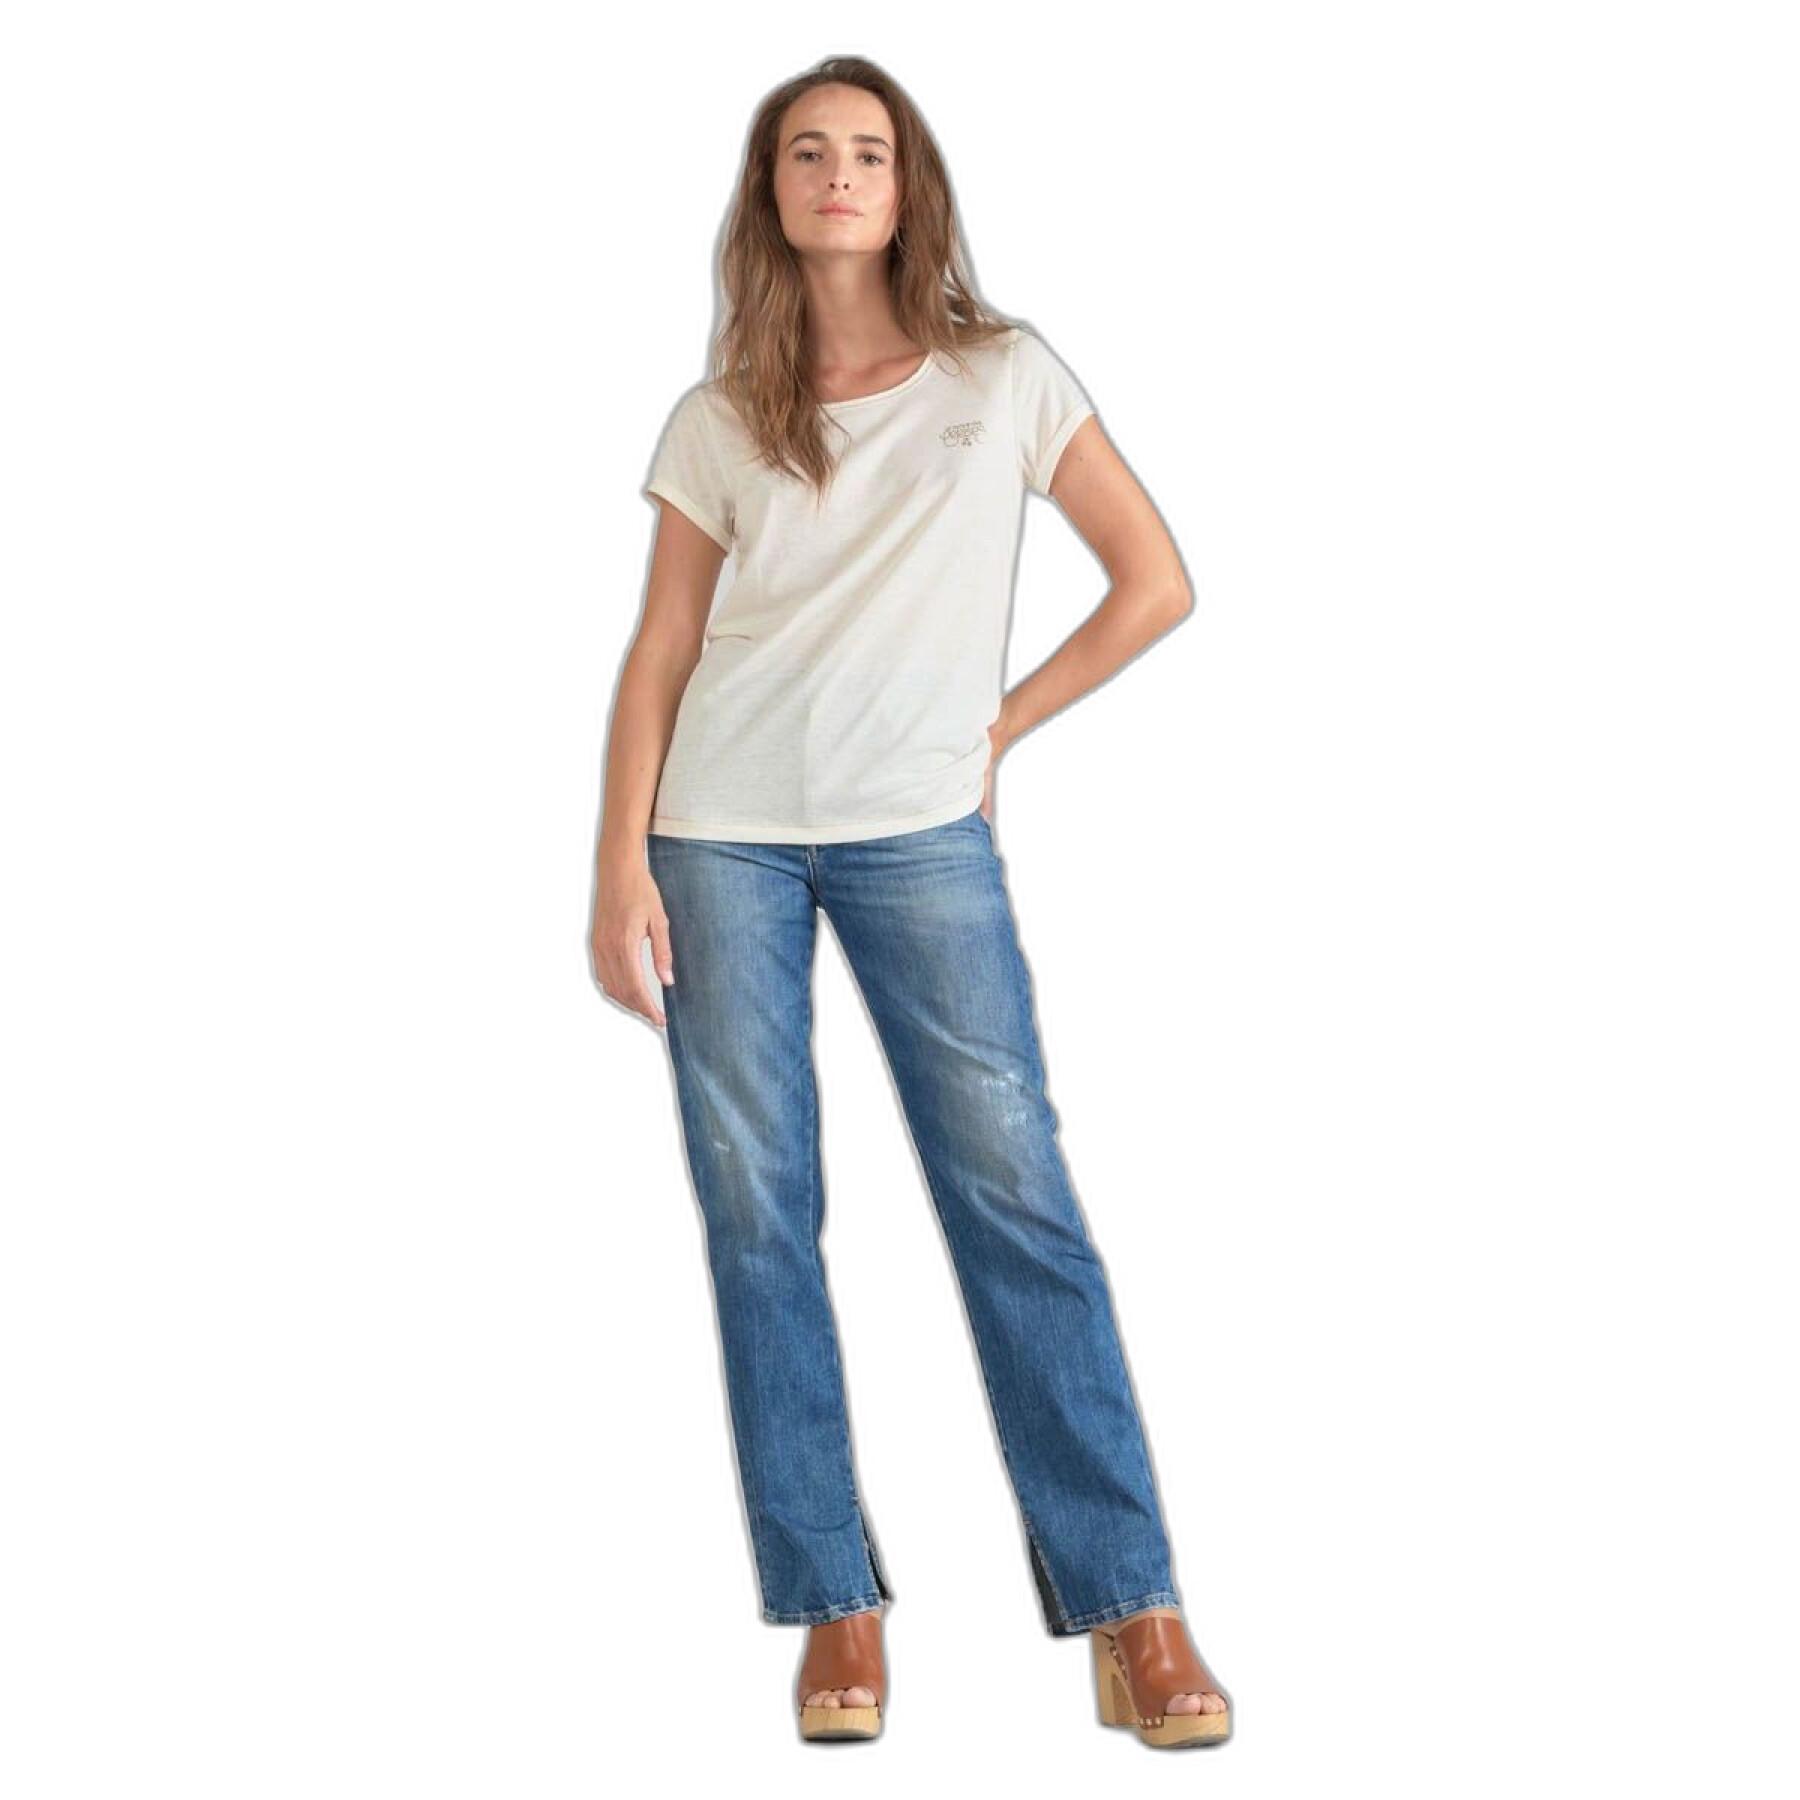 Women\'s T-shirt Le Lifestyle - Smallvtrame T-shirts - Woman tank cerises and tops des Temps 